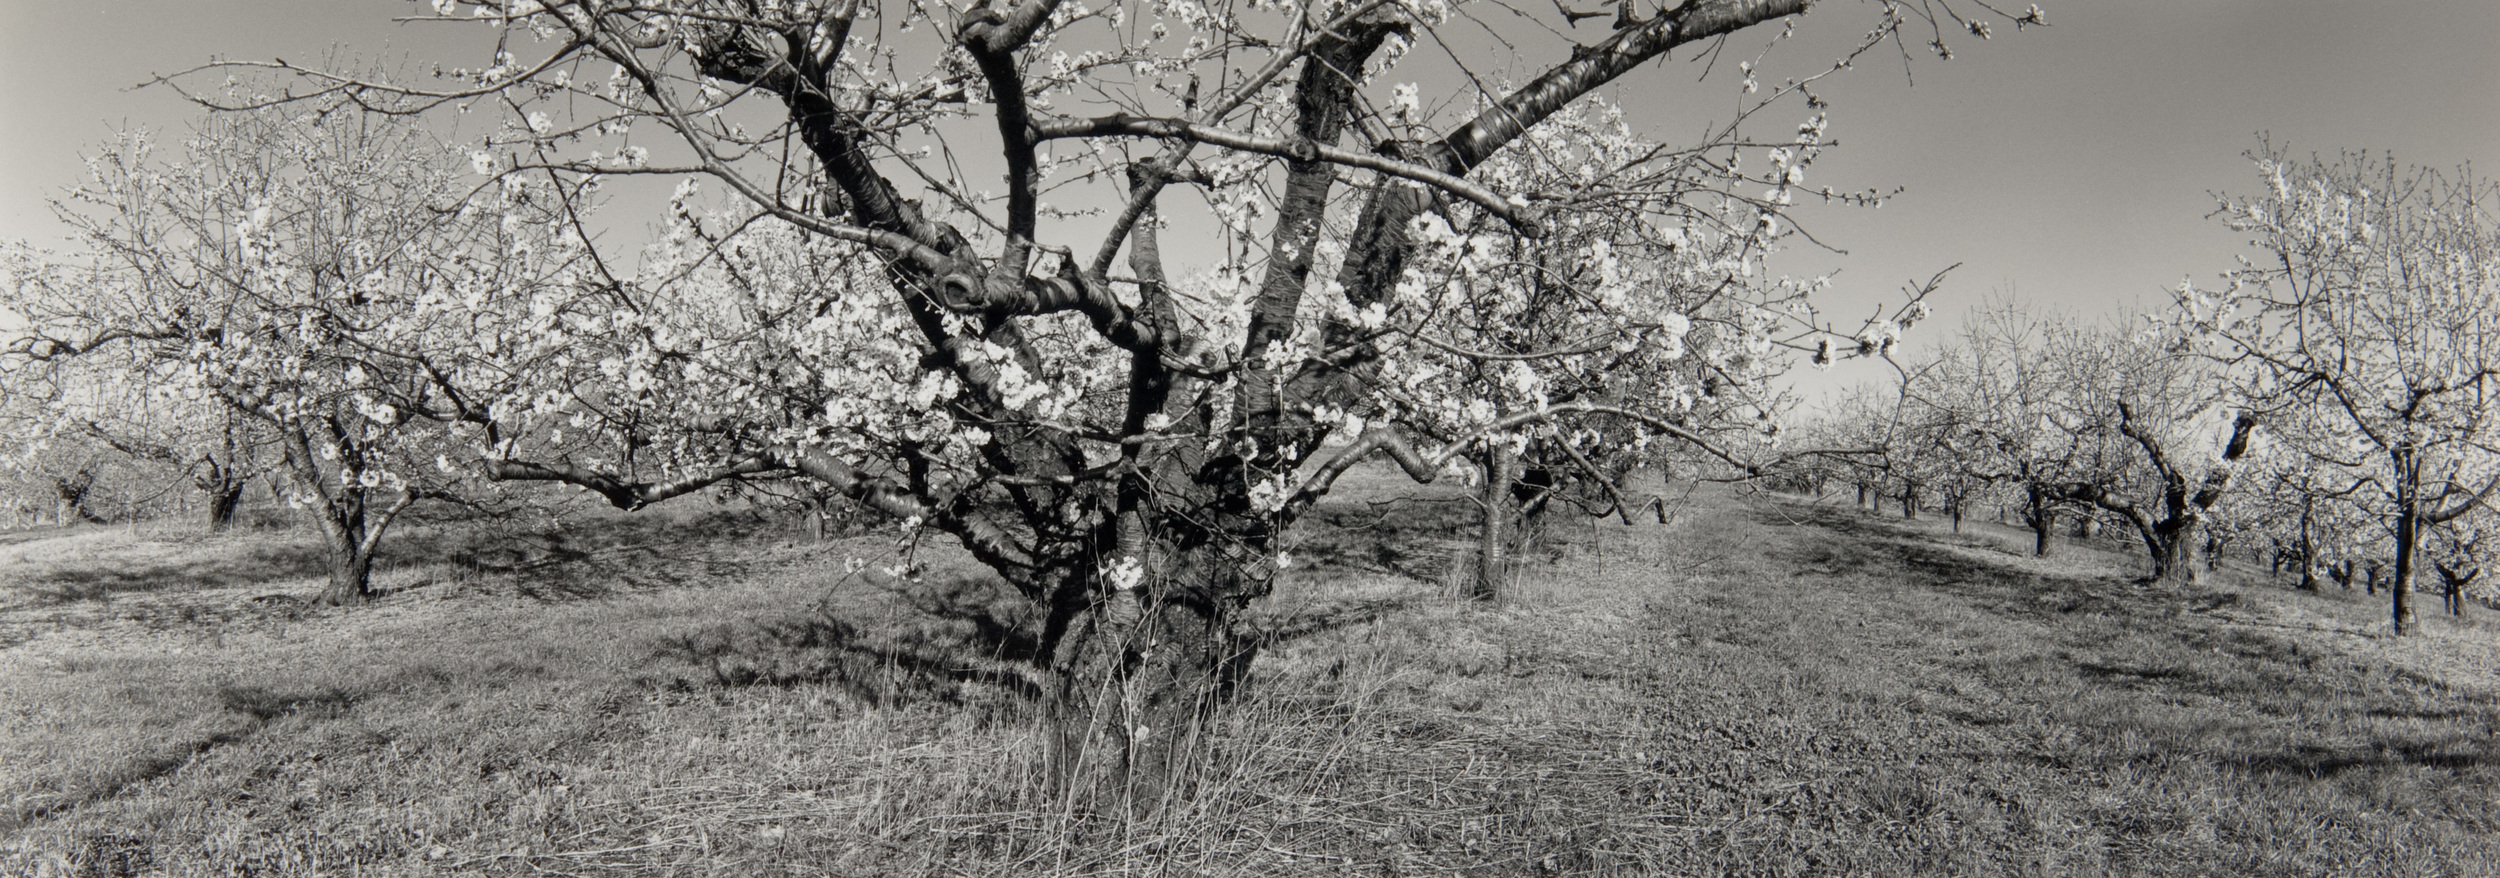 E. Lindbloom, Apple Orchard, Milton, 1998, gelatin silver print.jpg